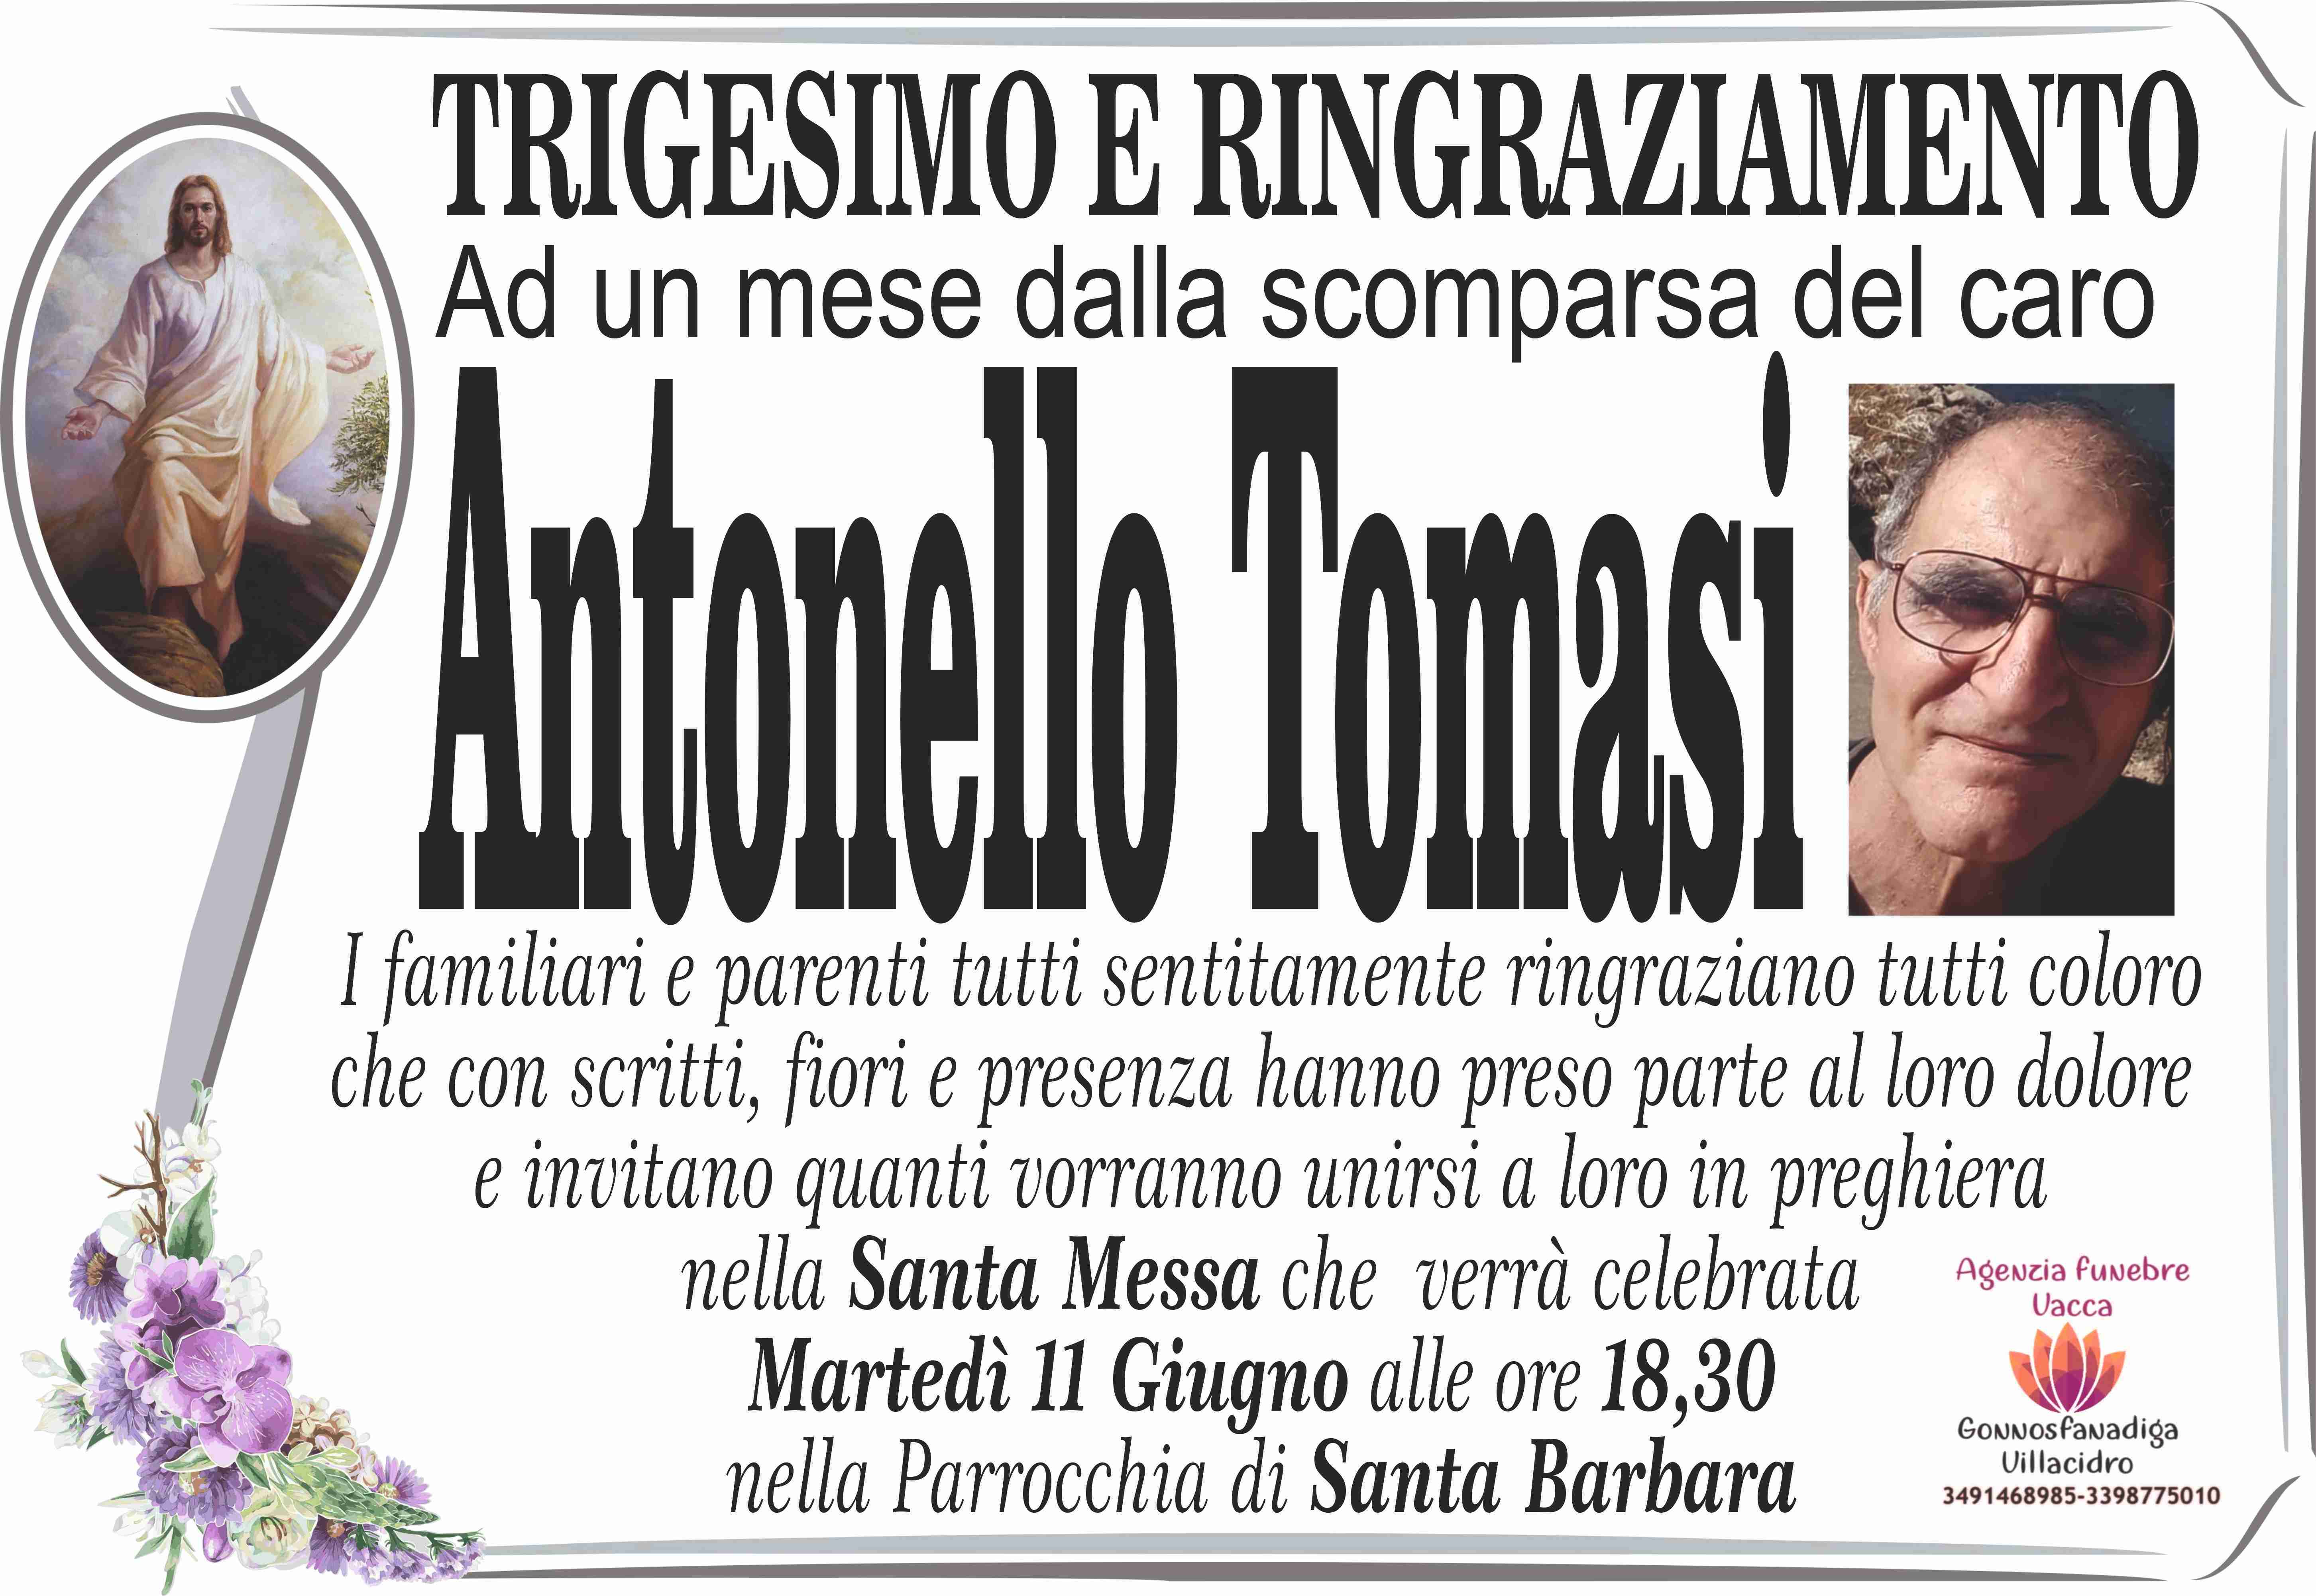 Antonello Tomasi